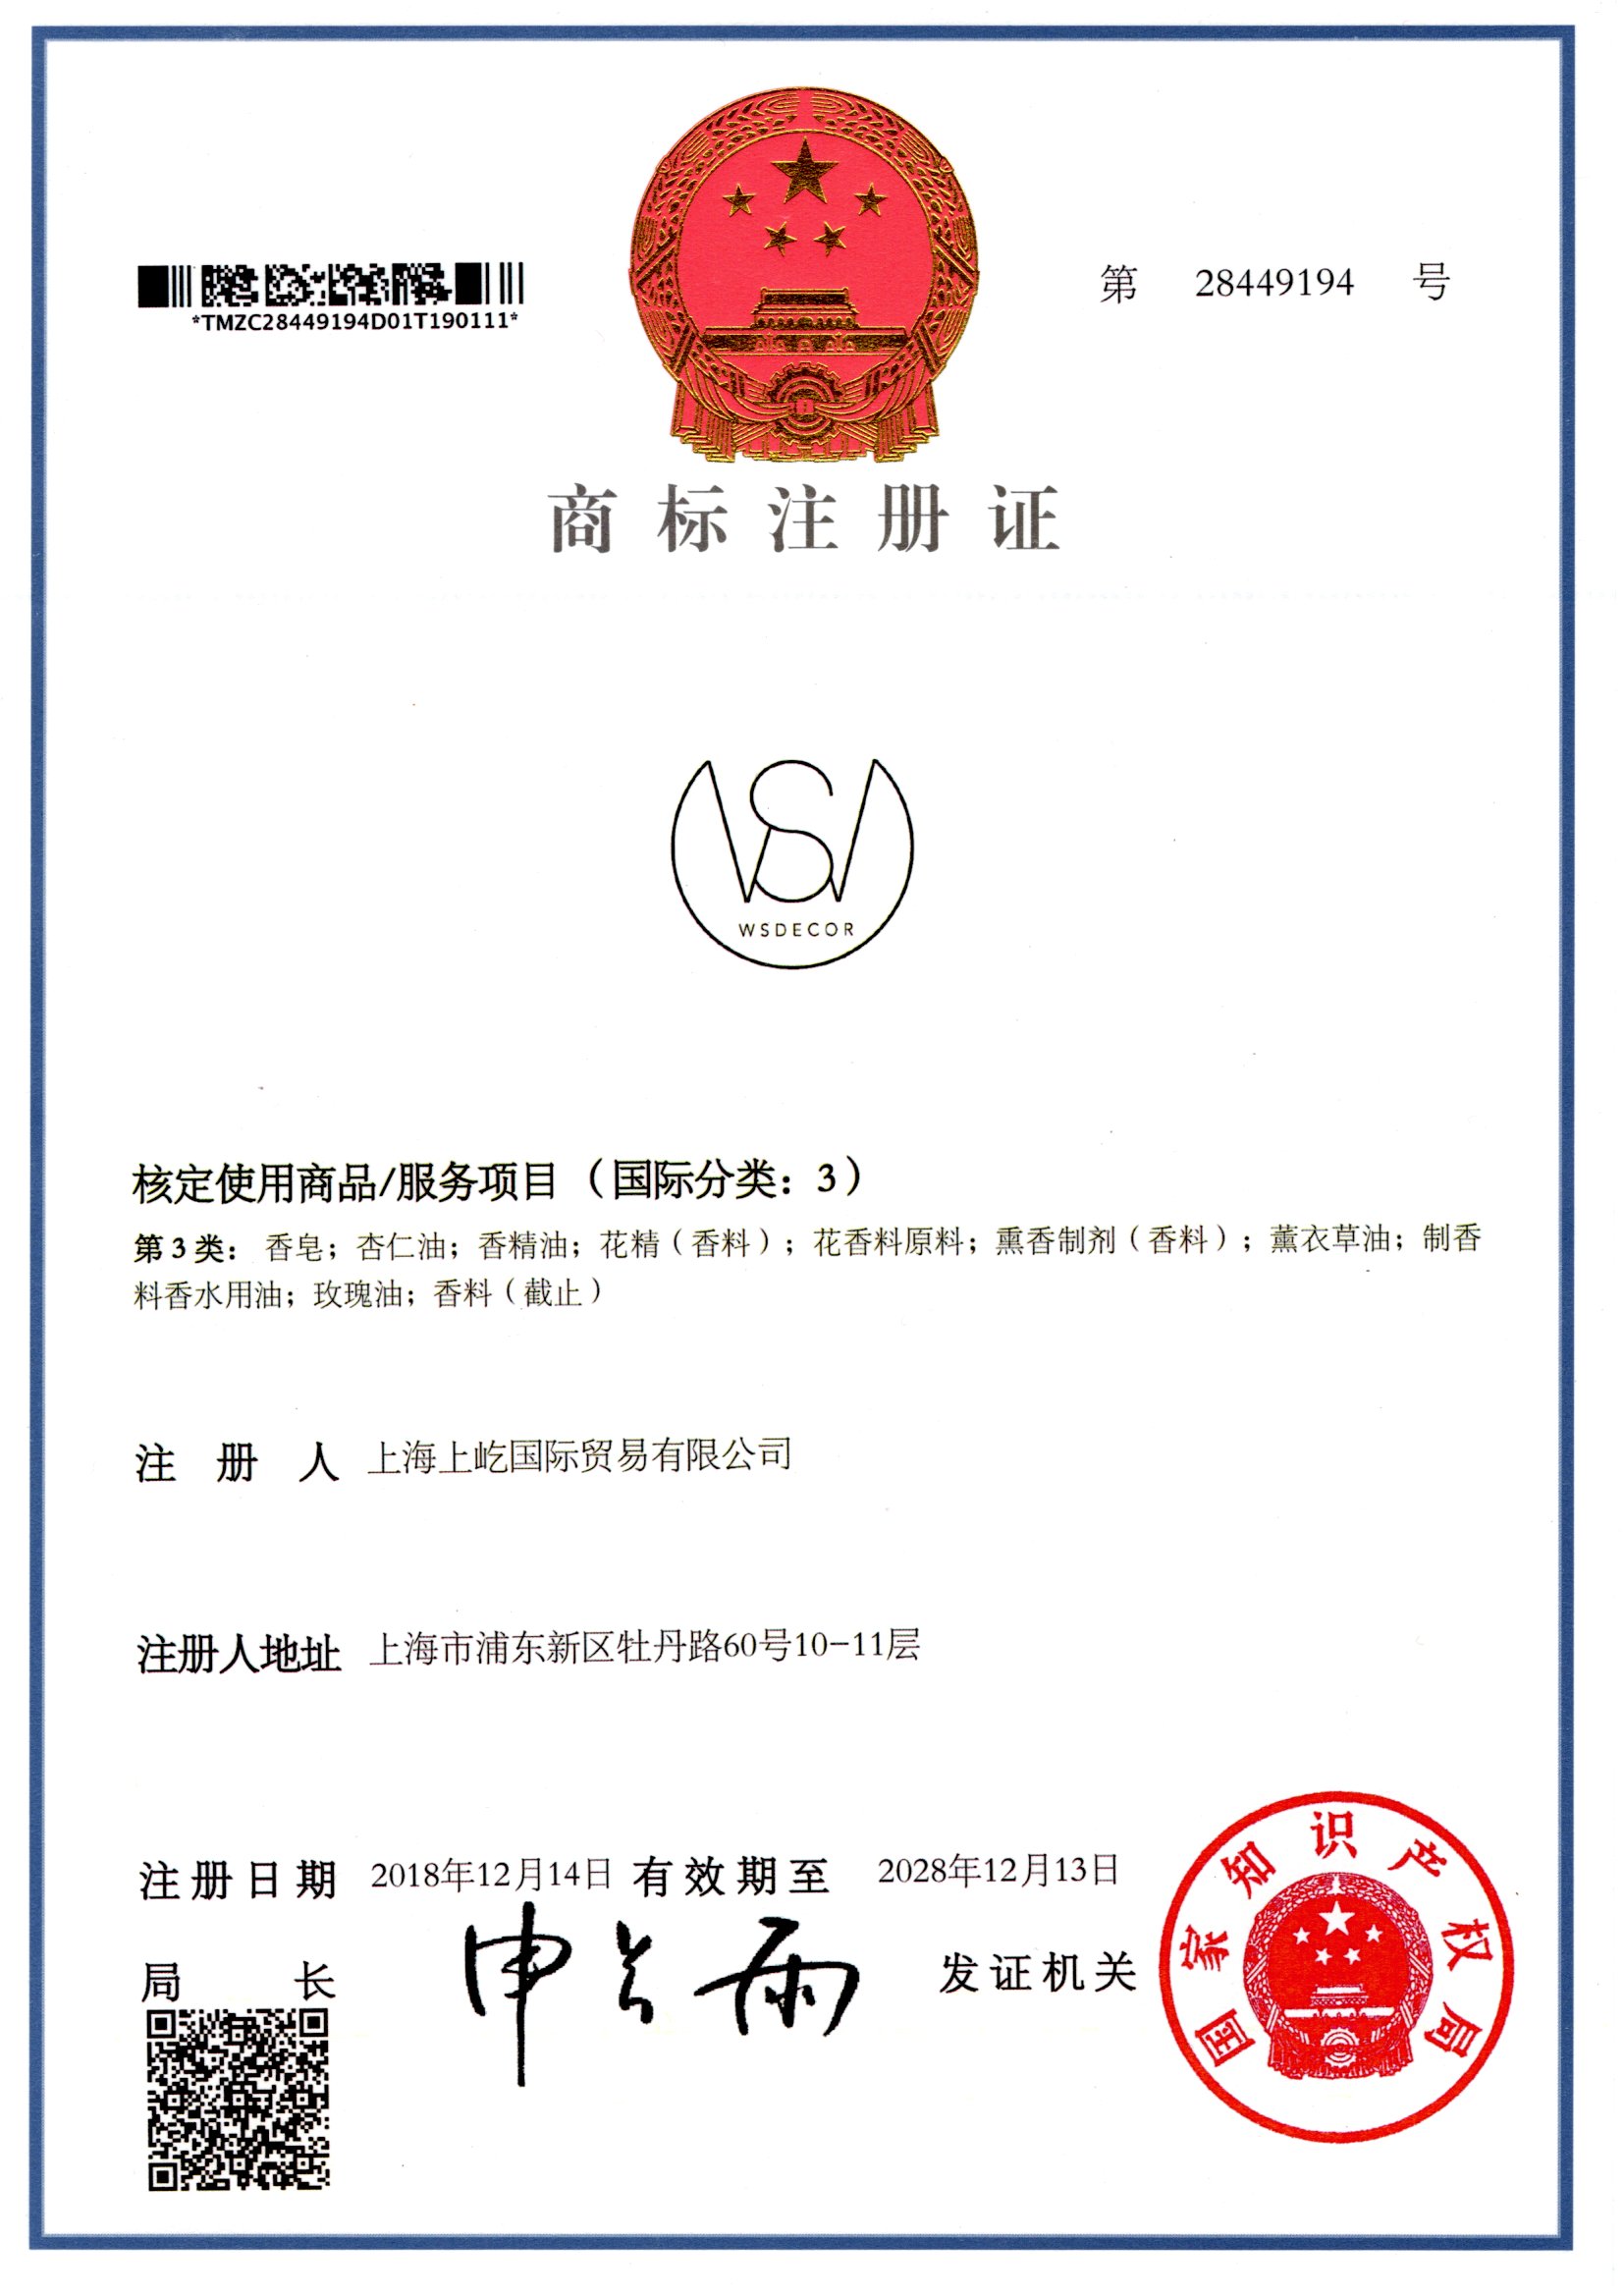 Trademark registration certificate No. 28449194